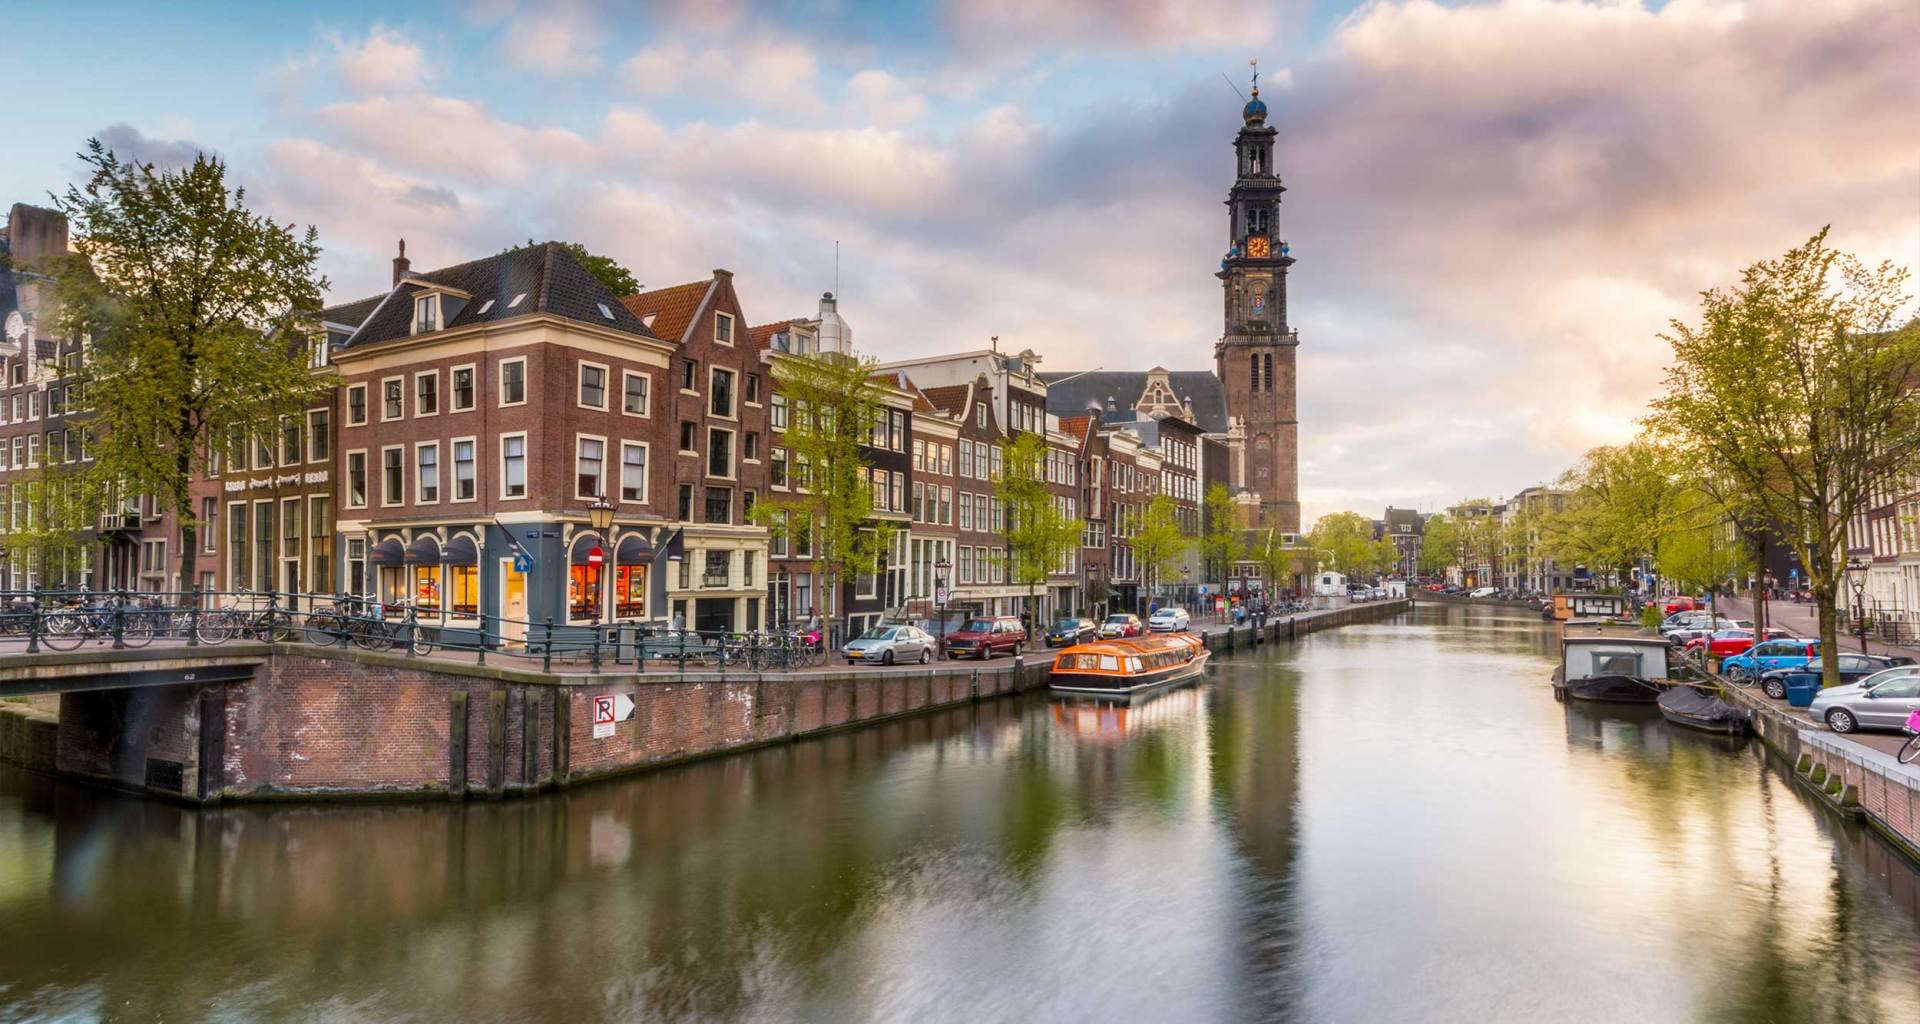 Amsterdam, The Netherlands - Tourist Destinations